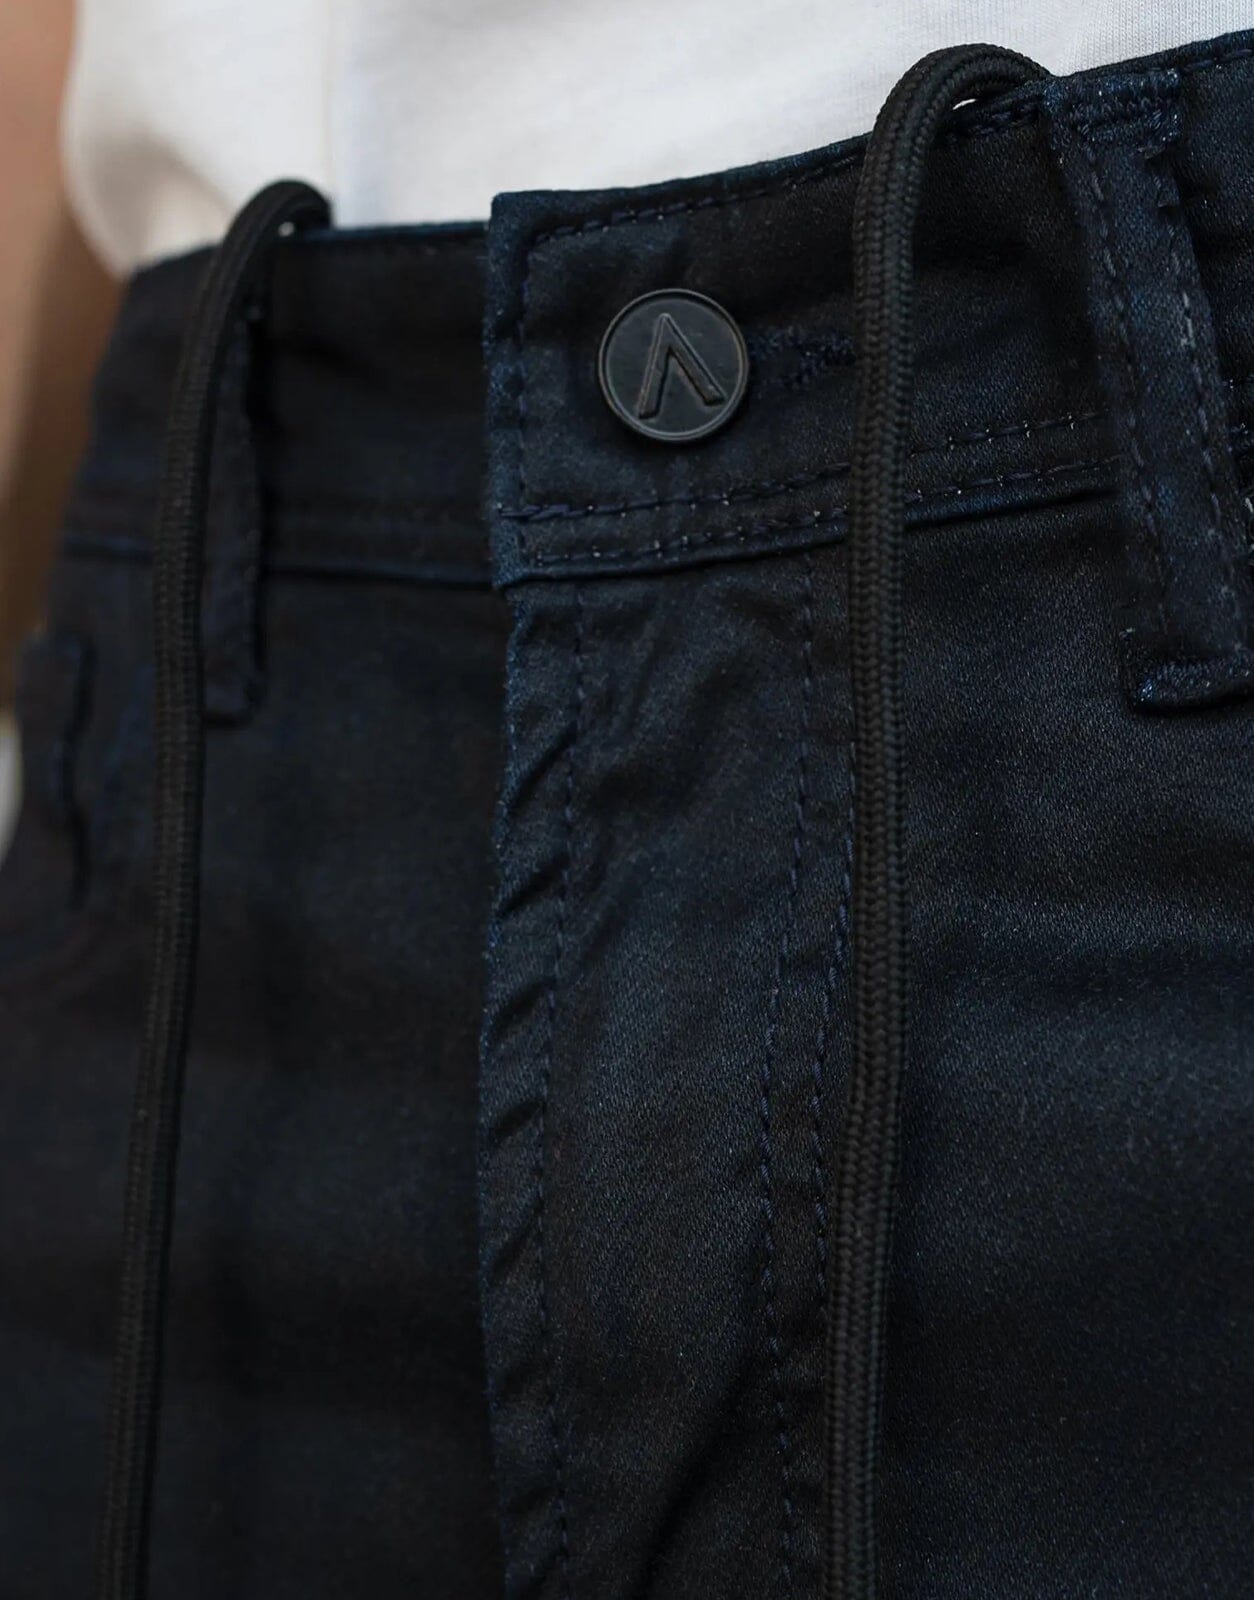 Fade Iconic Shadow Blue Jeans - Subwear